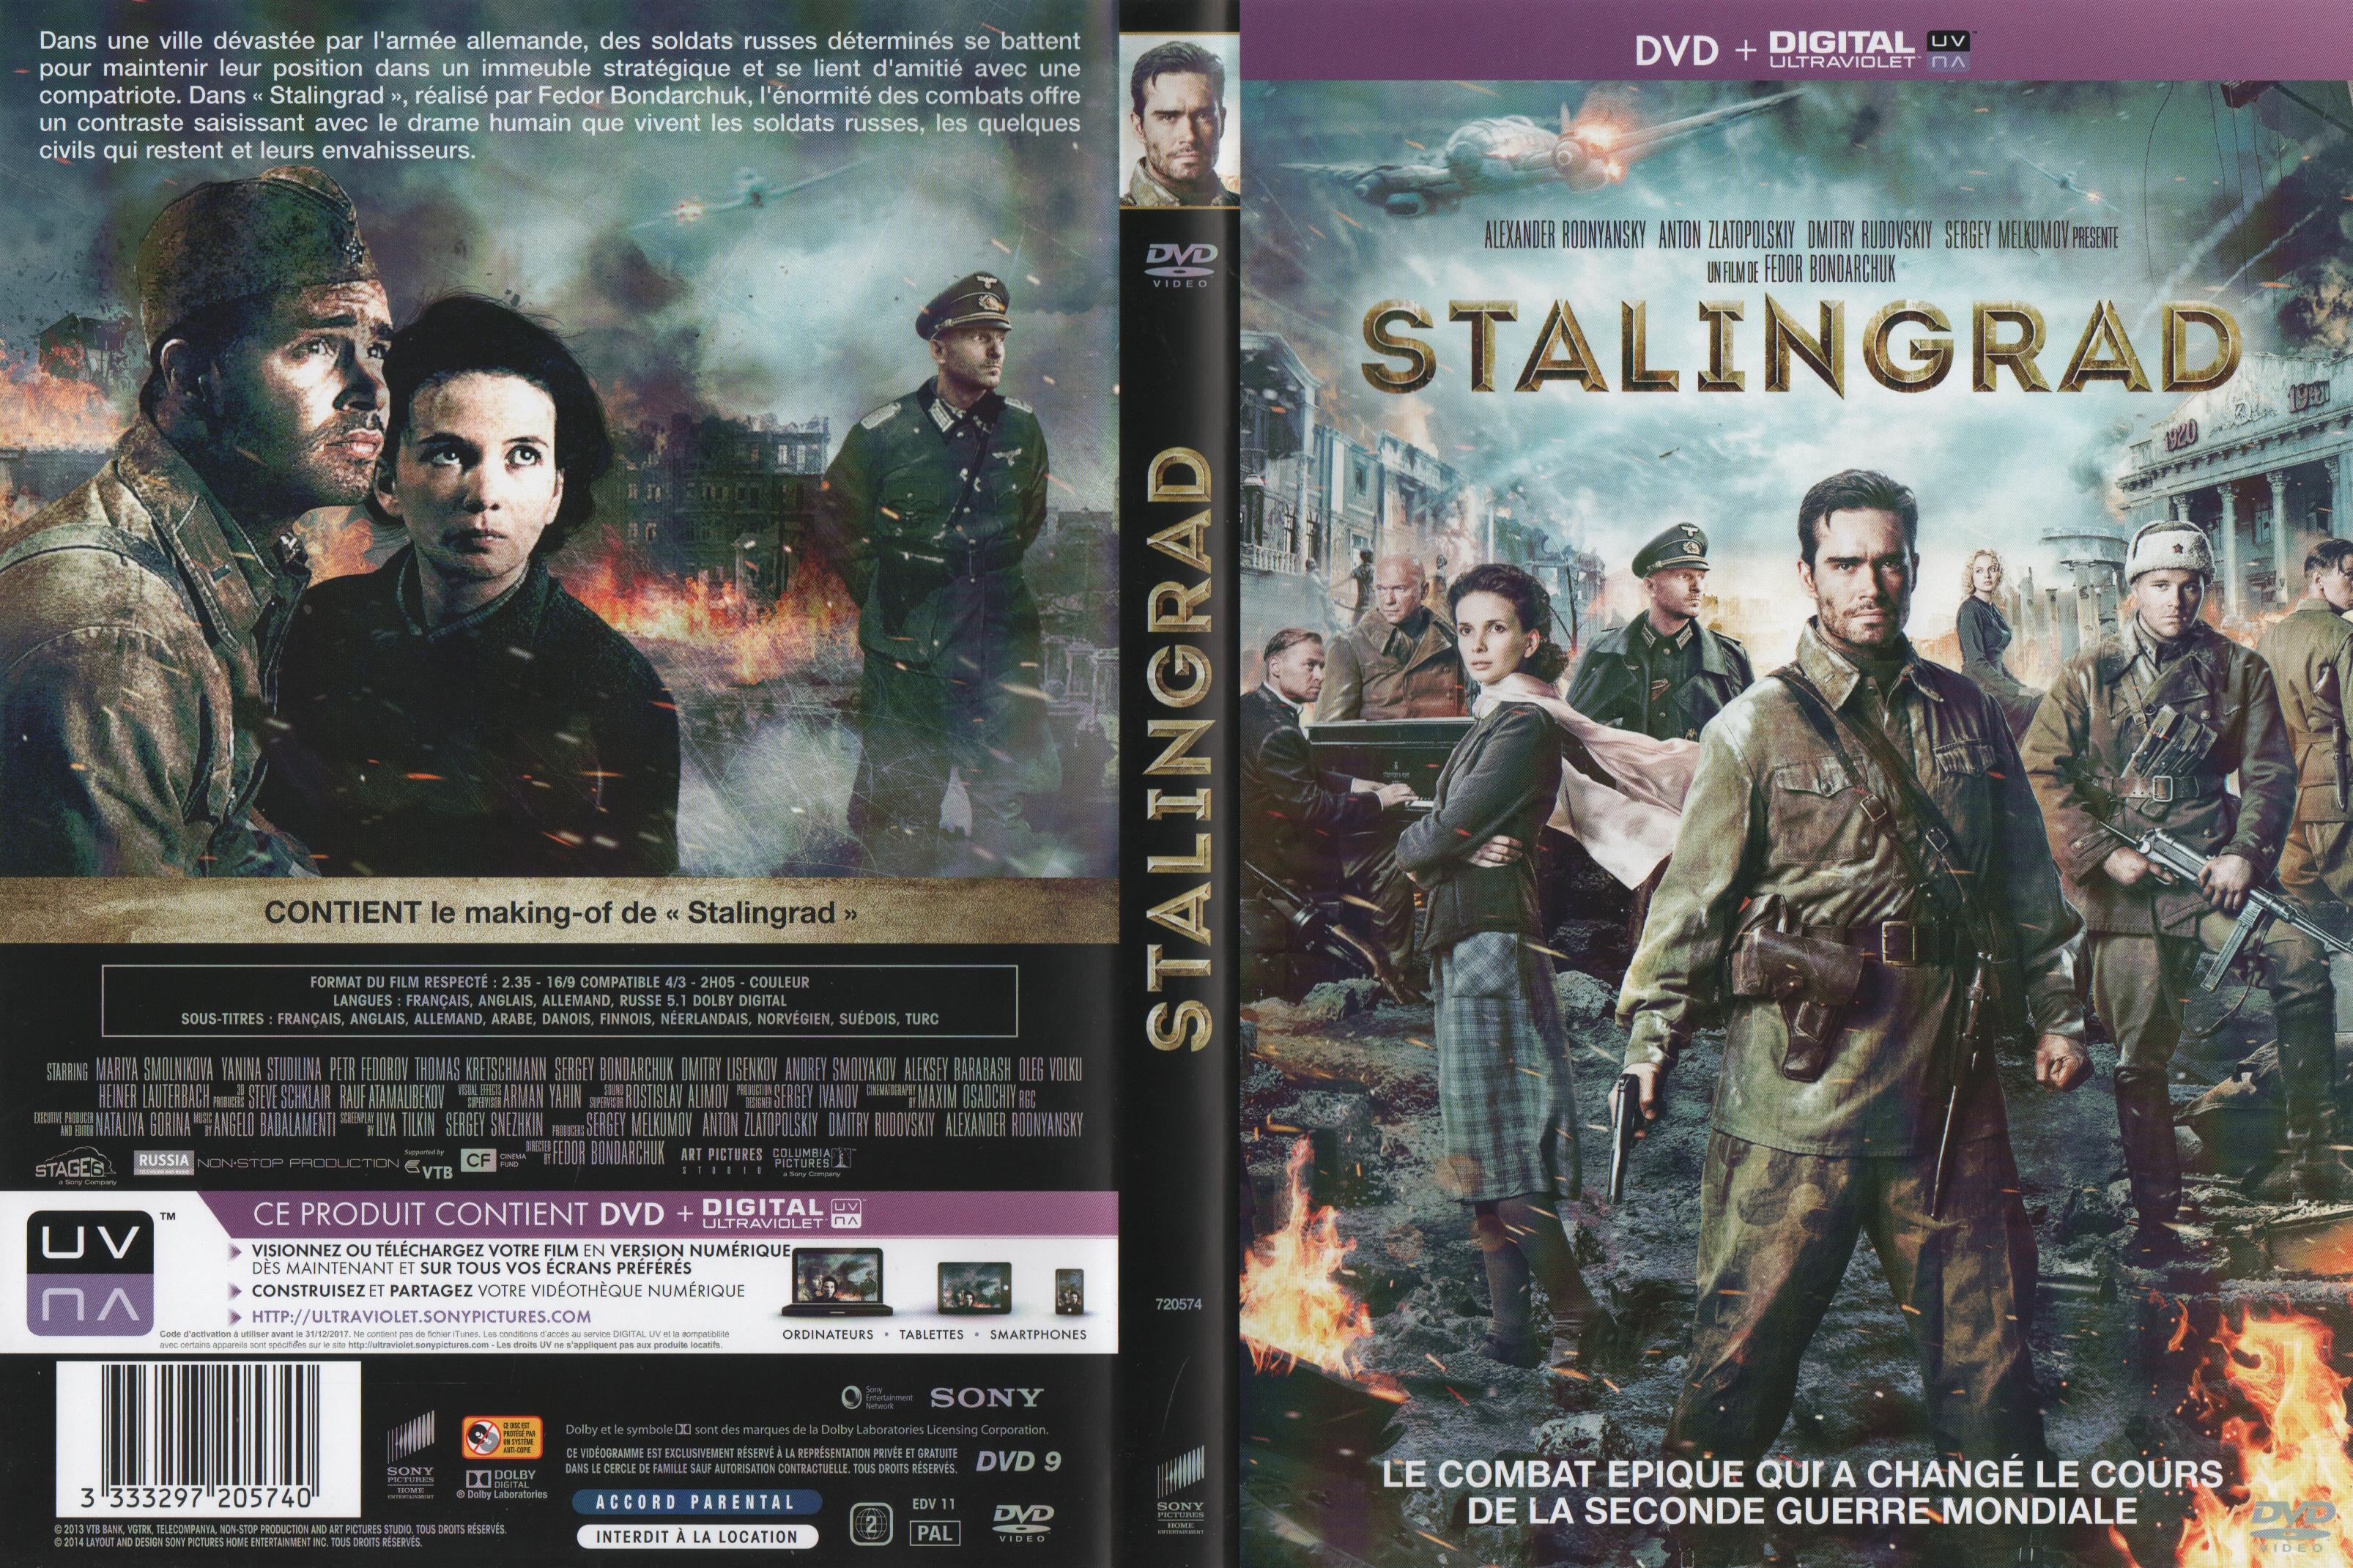 Jaquette DVD Stalingrad (2013)